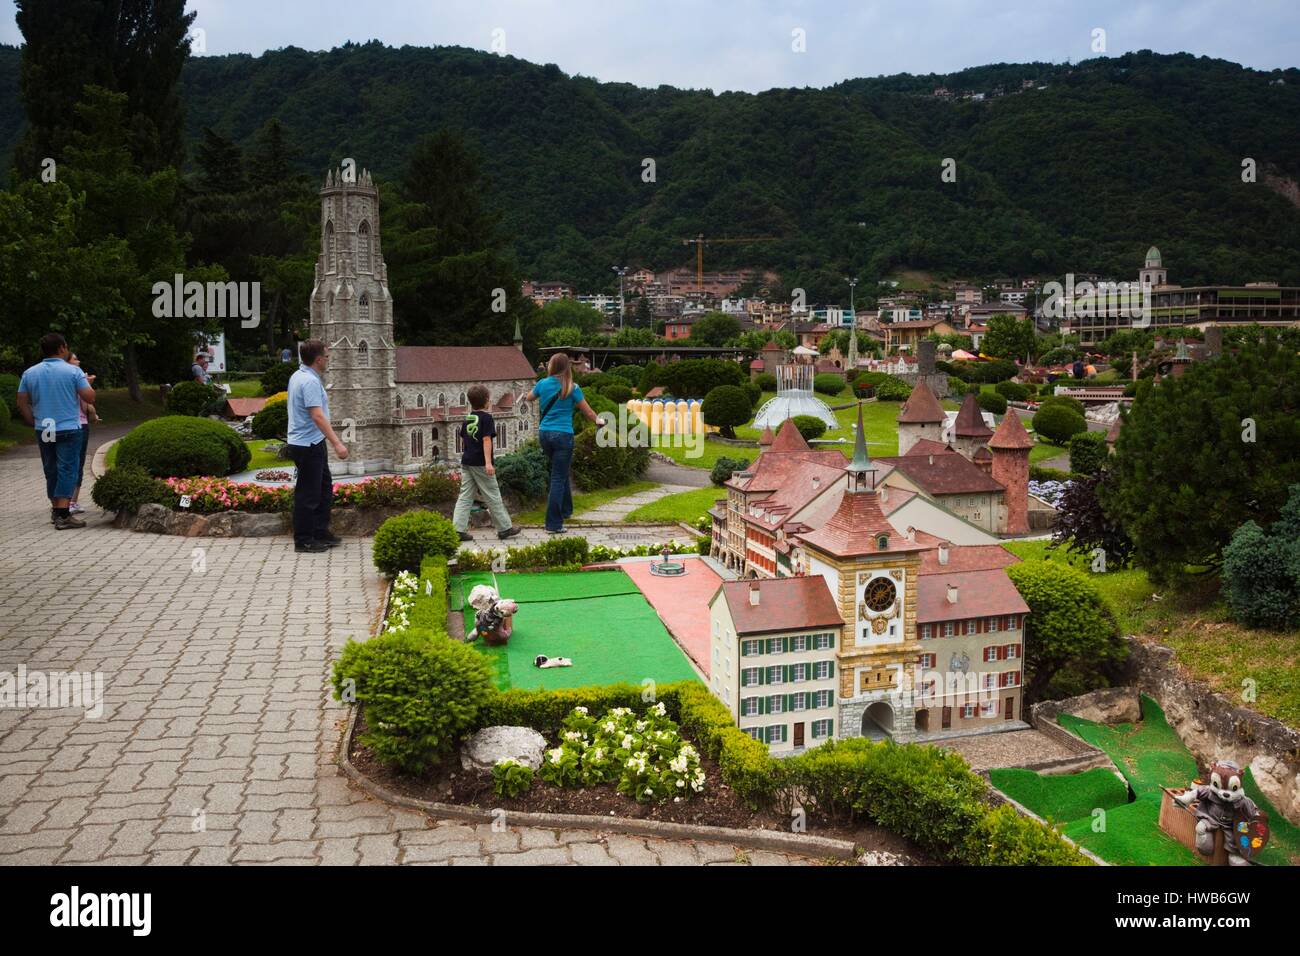 Switzerland, Ticino, Lake Lugano, Melide, Swissminiatur, Miniature Switzerland model theme park Stock Photo